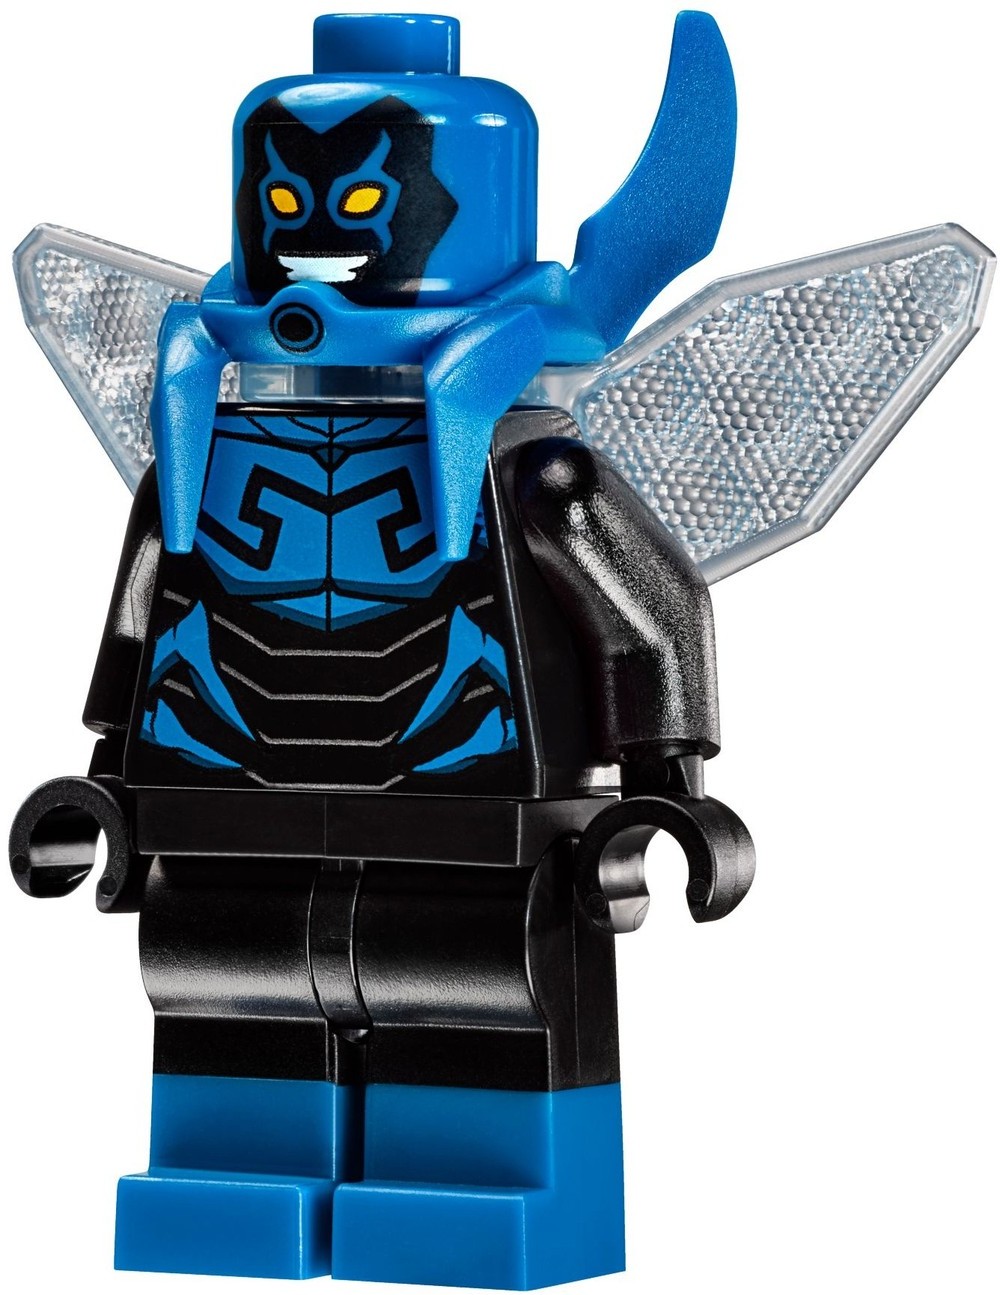 Blue Beetle Brickipedia The Lego Wiki